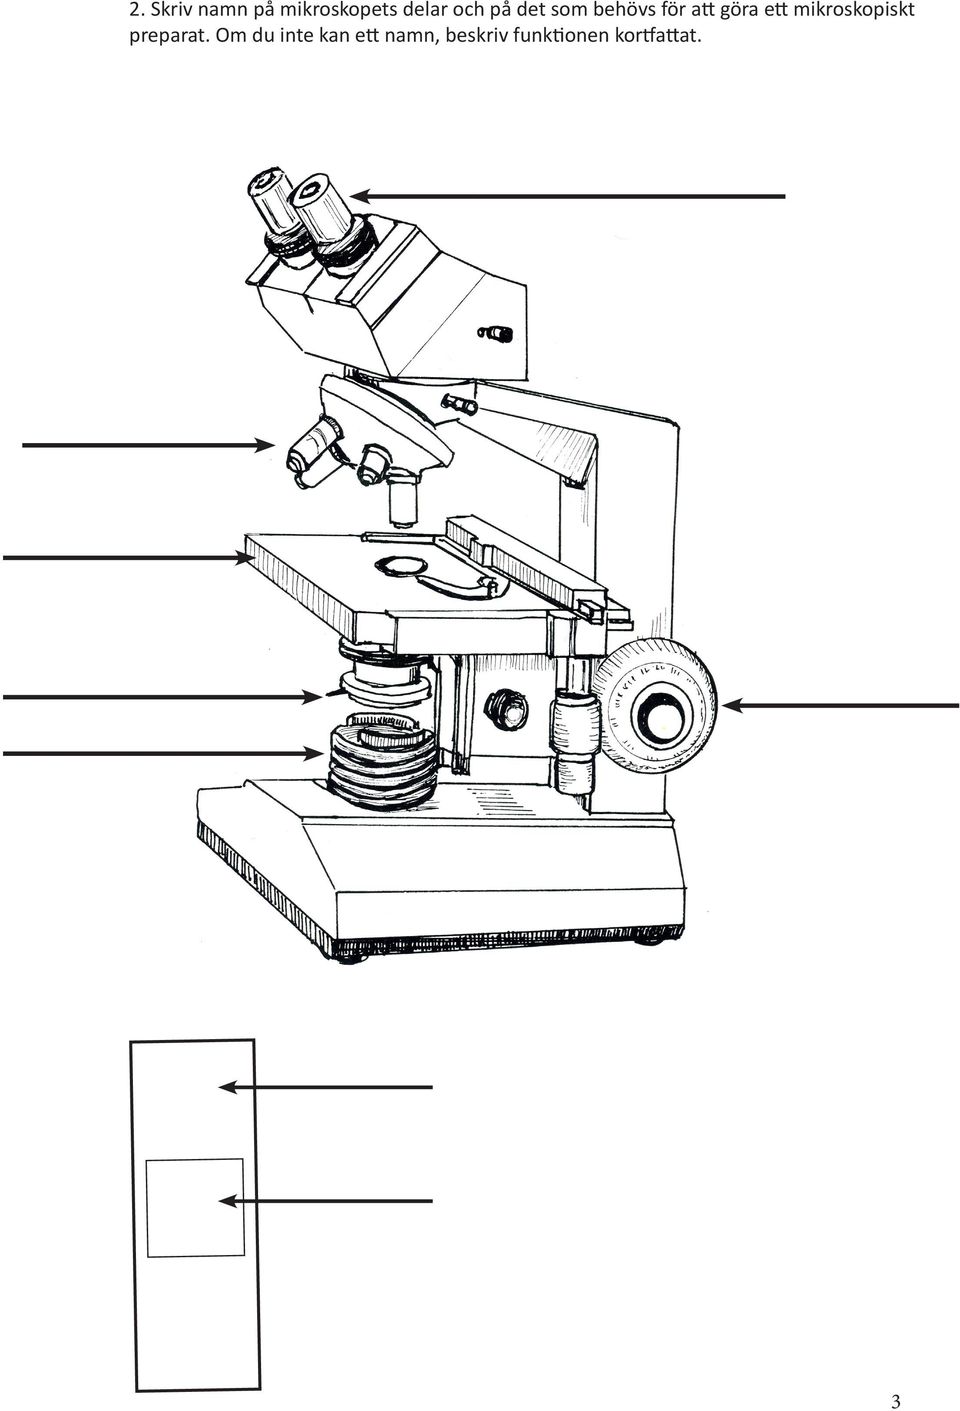 mikroskopets delar